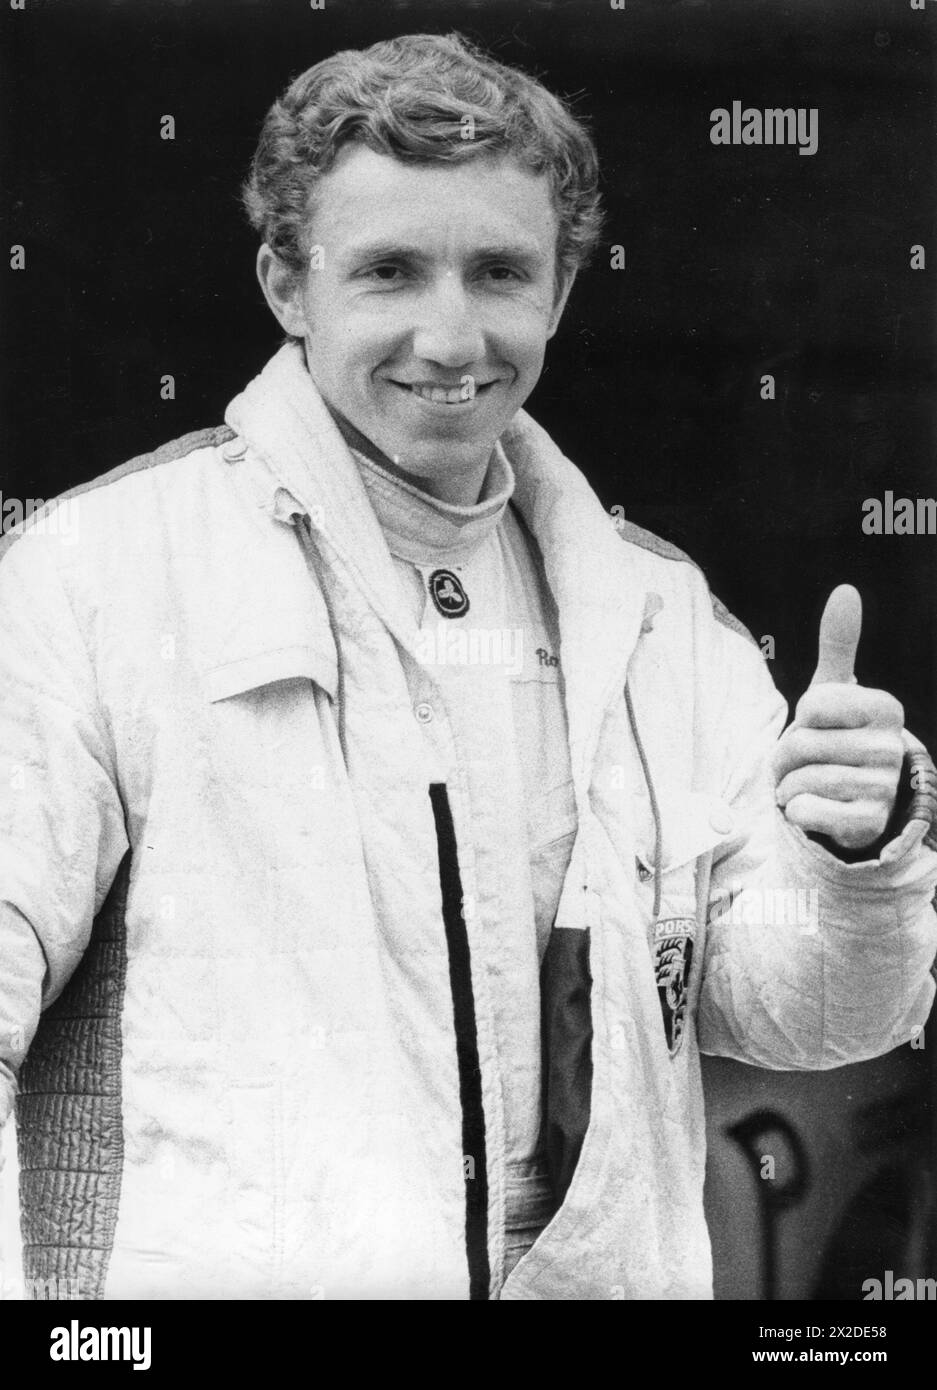 Stommelen, Rolf, 11.7.1943 - 24.4,1983, deutscher Rennfahrer, 1000-Kilometer-Rennen, DER RING, ADDITIONAL-RIGHTS-CLEARANCE-INFO-NOT-AVAILABLE Stockfoto